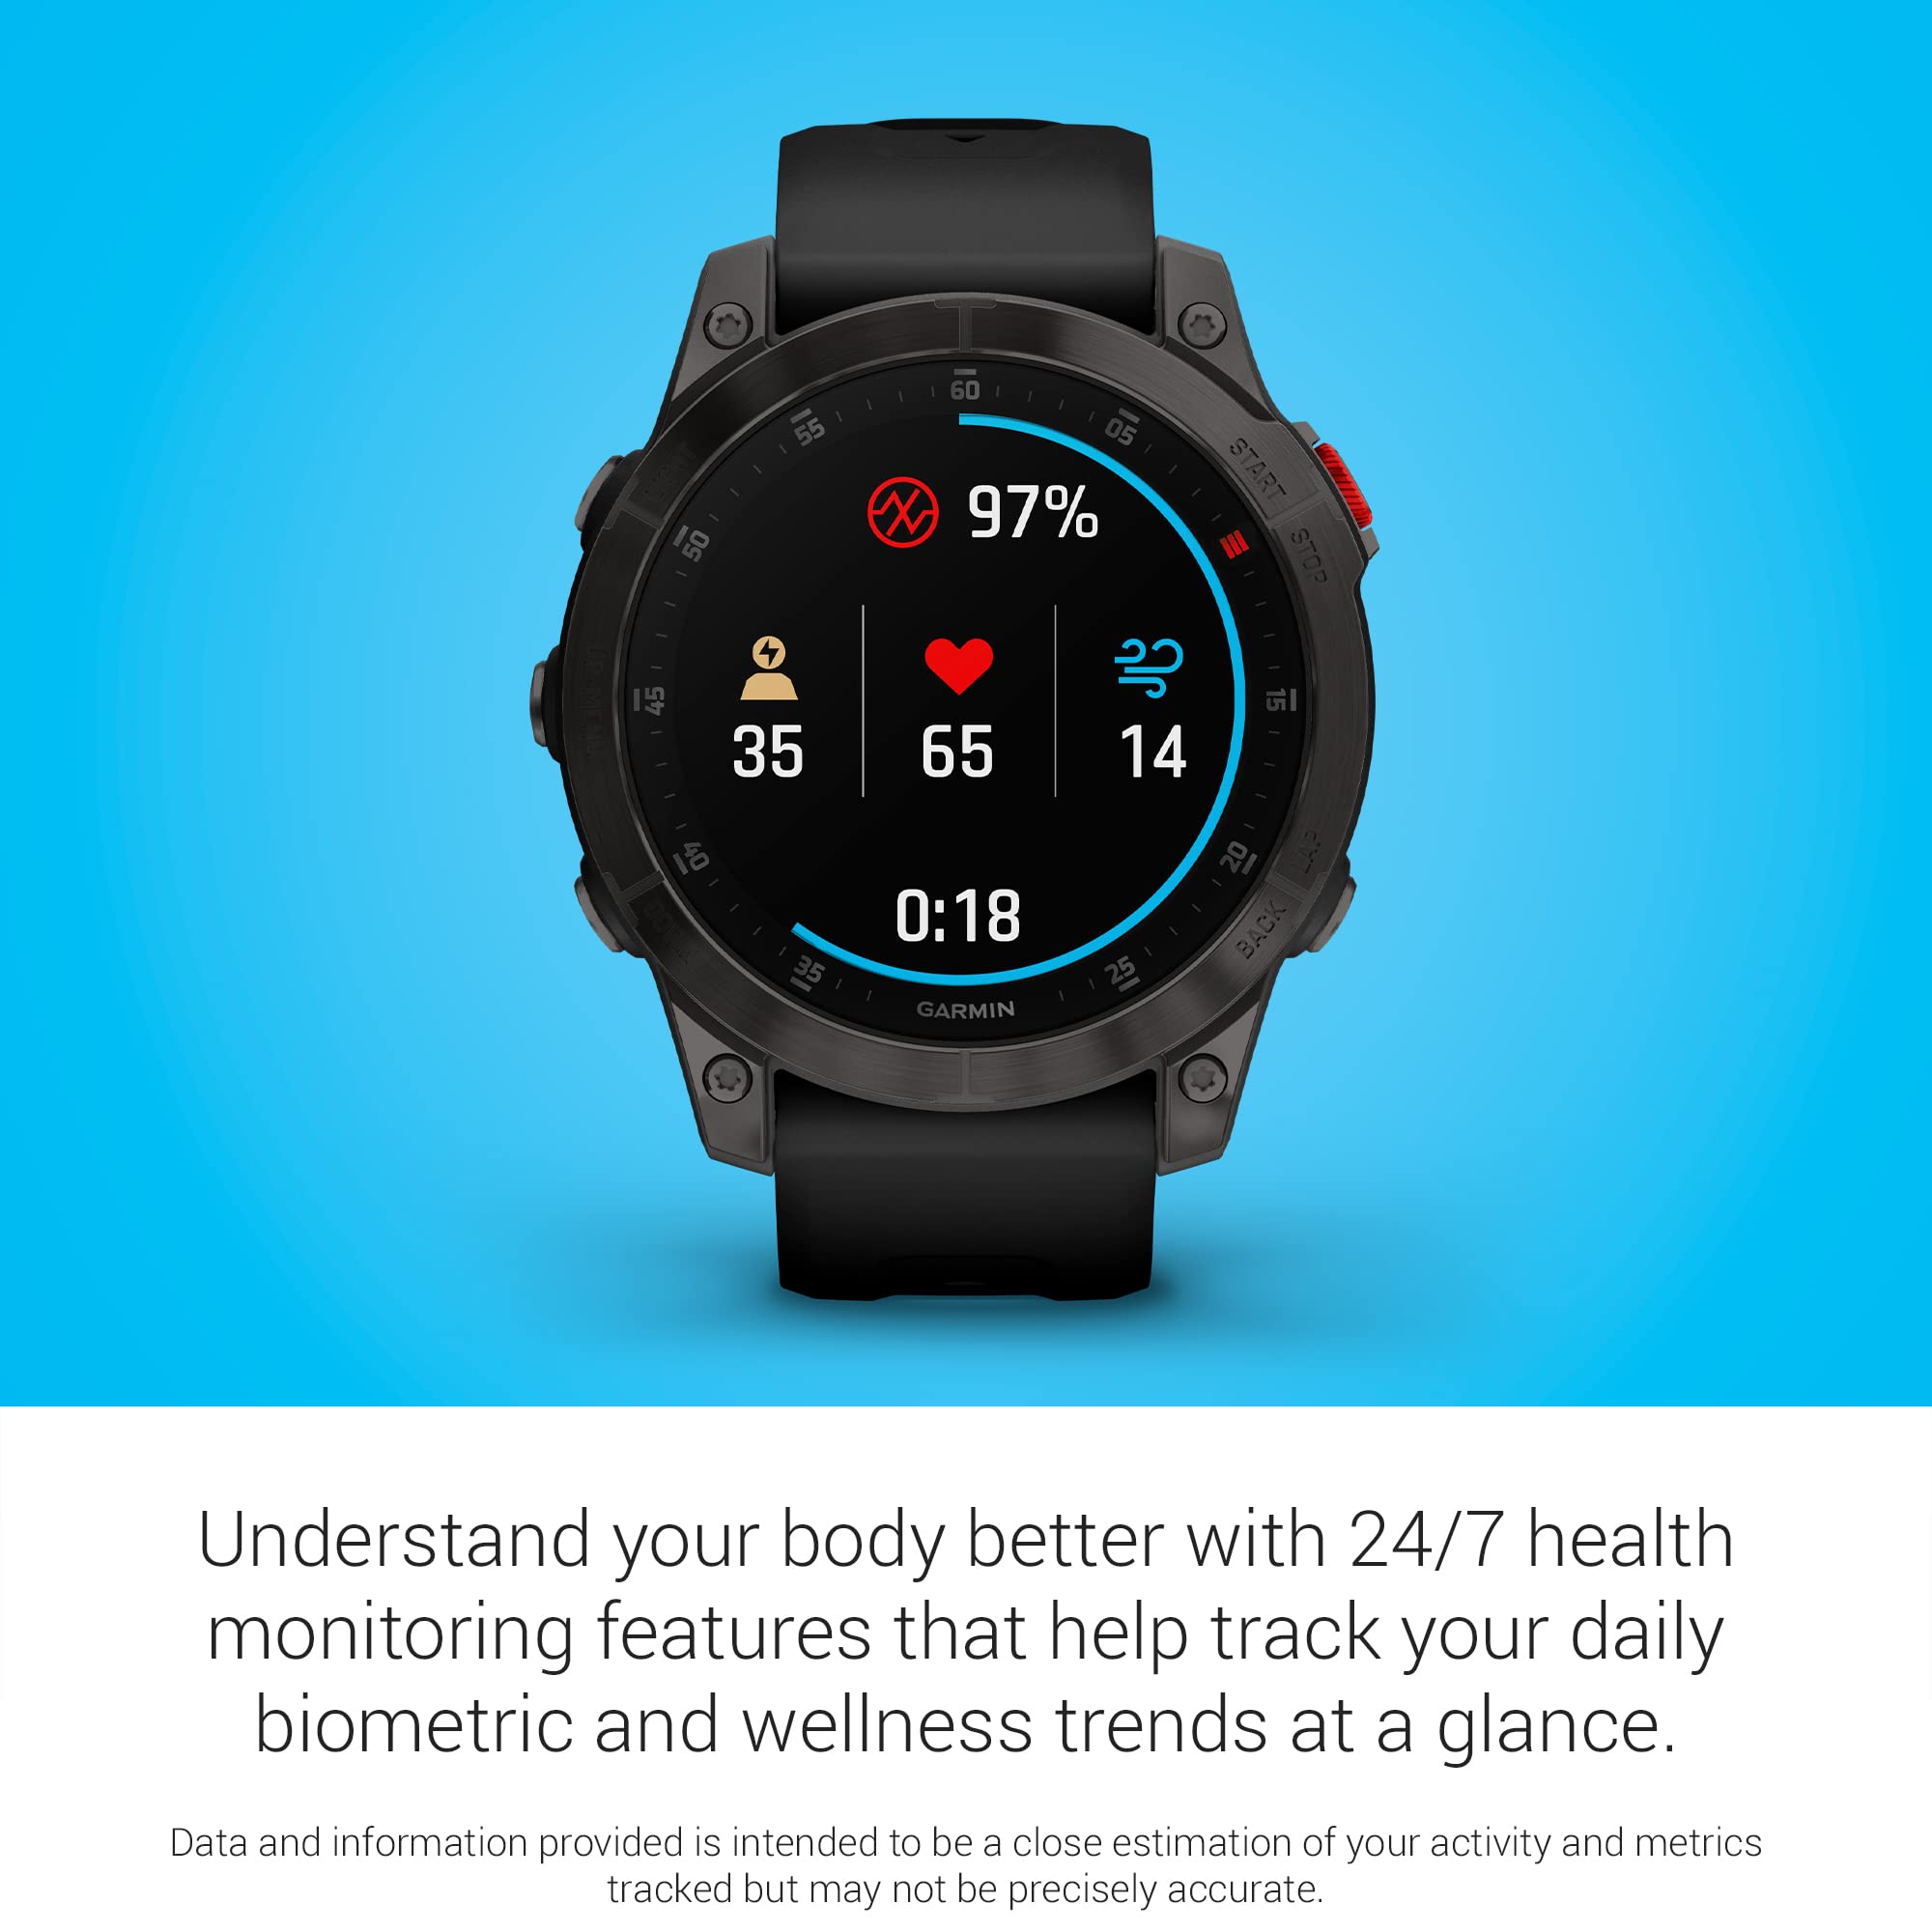 Garmin 010-02582-10 epix Gen 2, Premium active smartwatch, Health and wellness features, touchscreen AMOLED display, adventure watch with advanced features, black titanium